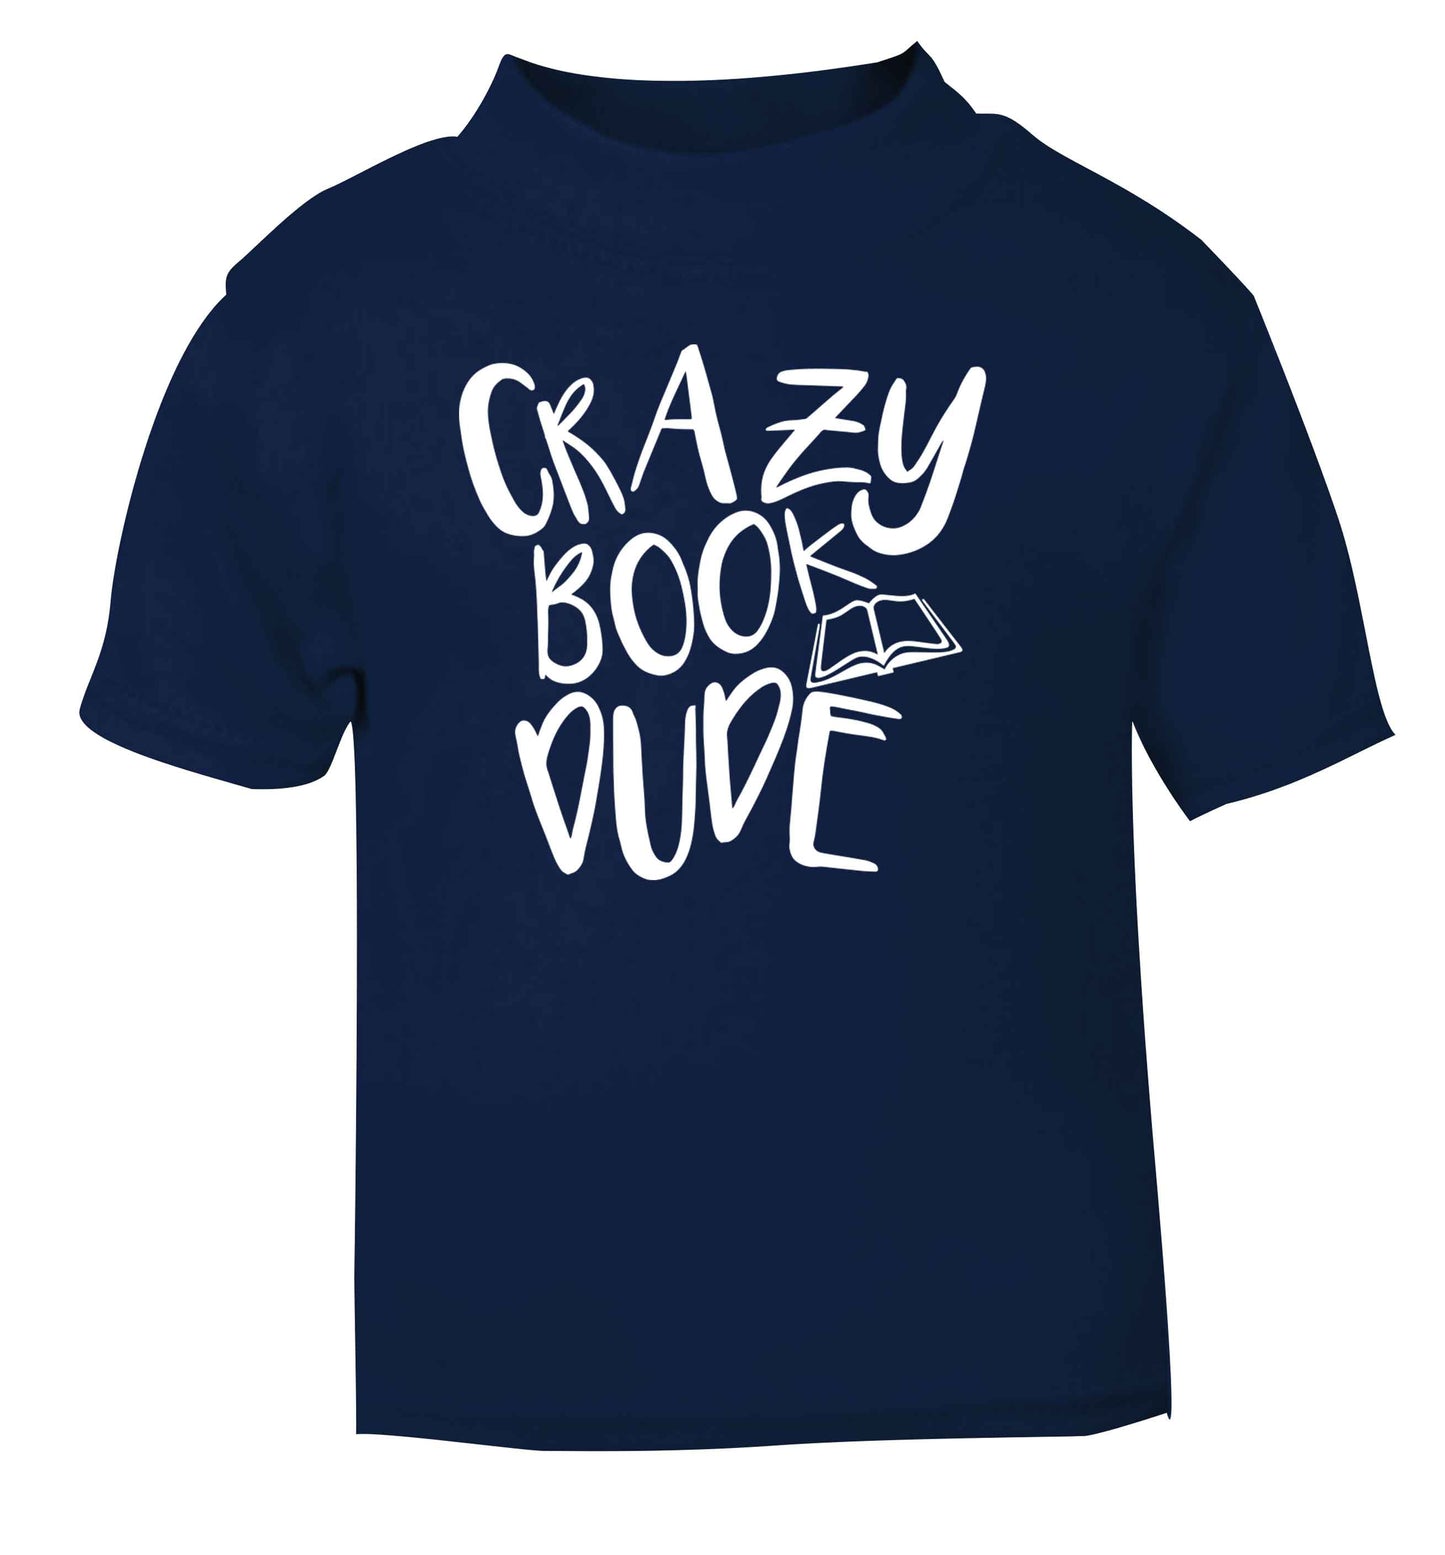 Crazy book dude navy Baby Toddler Tshirt 2 Years